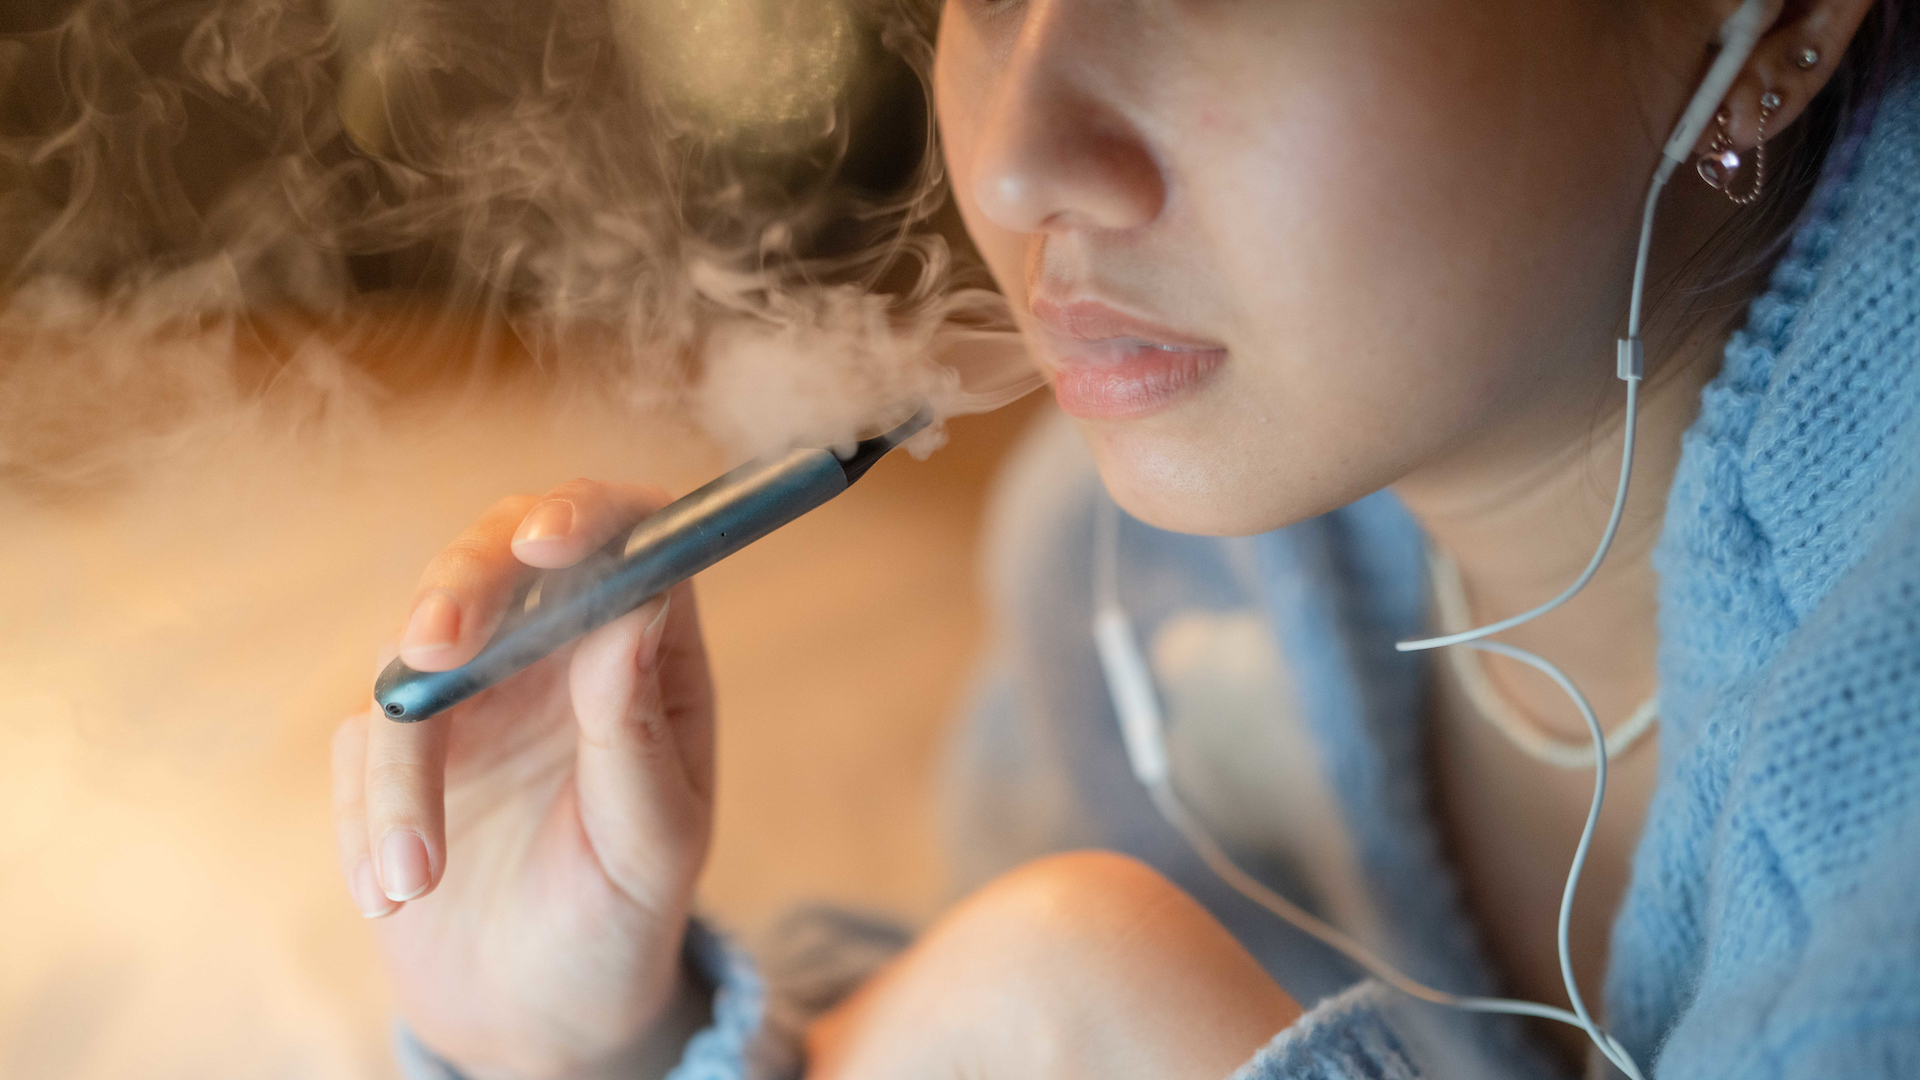 Australia to ban recreational vaping in crackdown on e-cigarettes, World  News